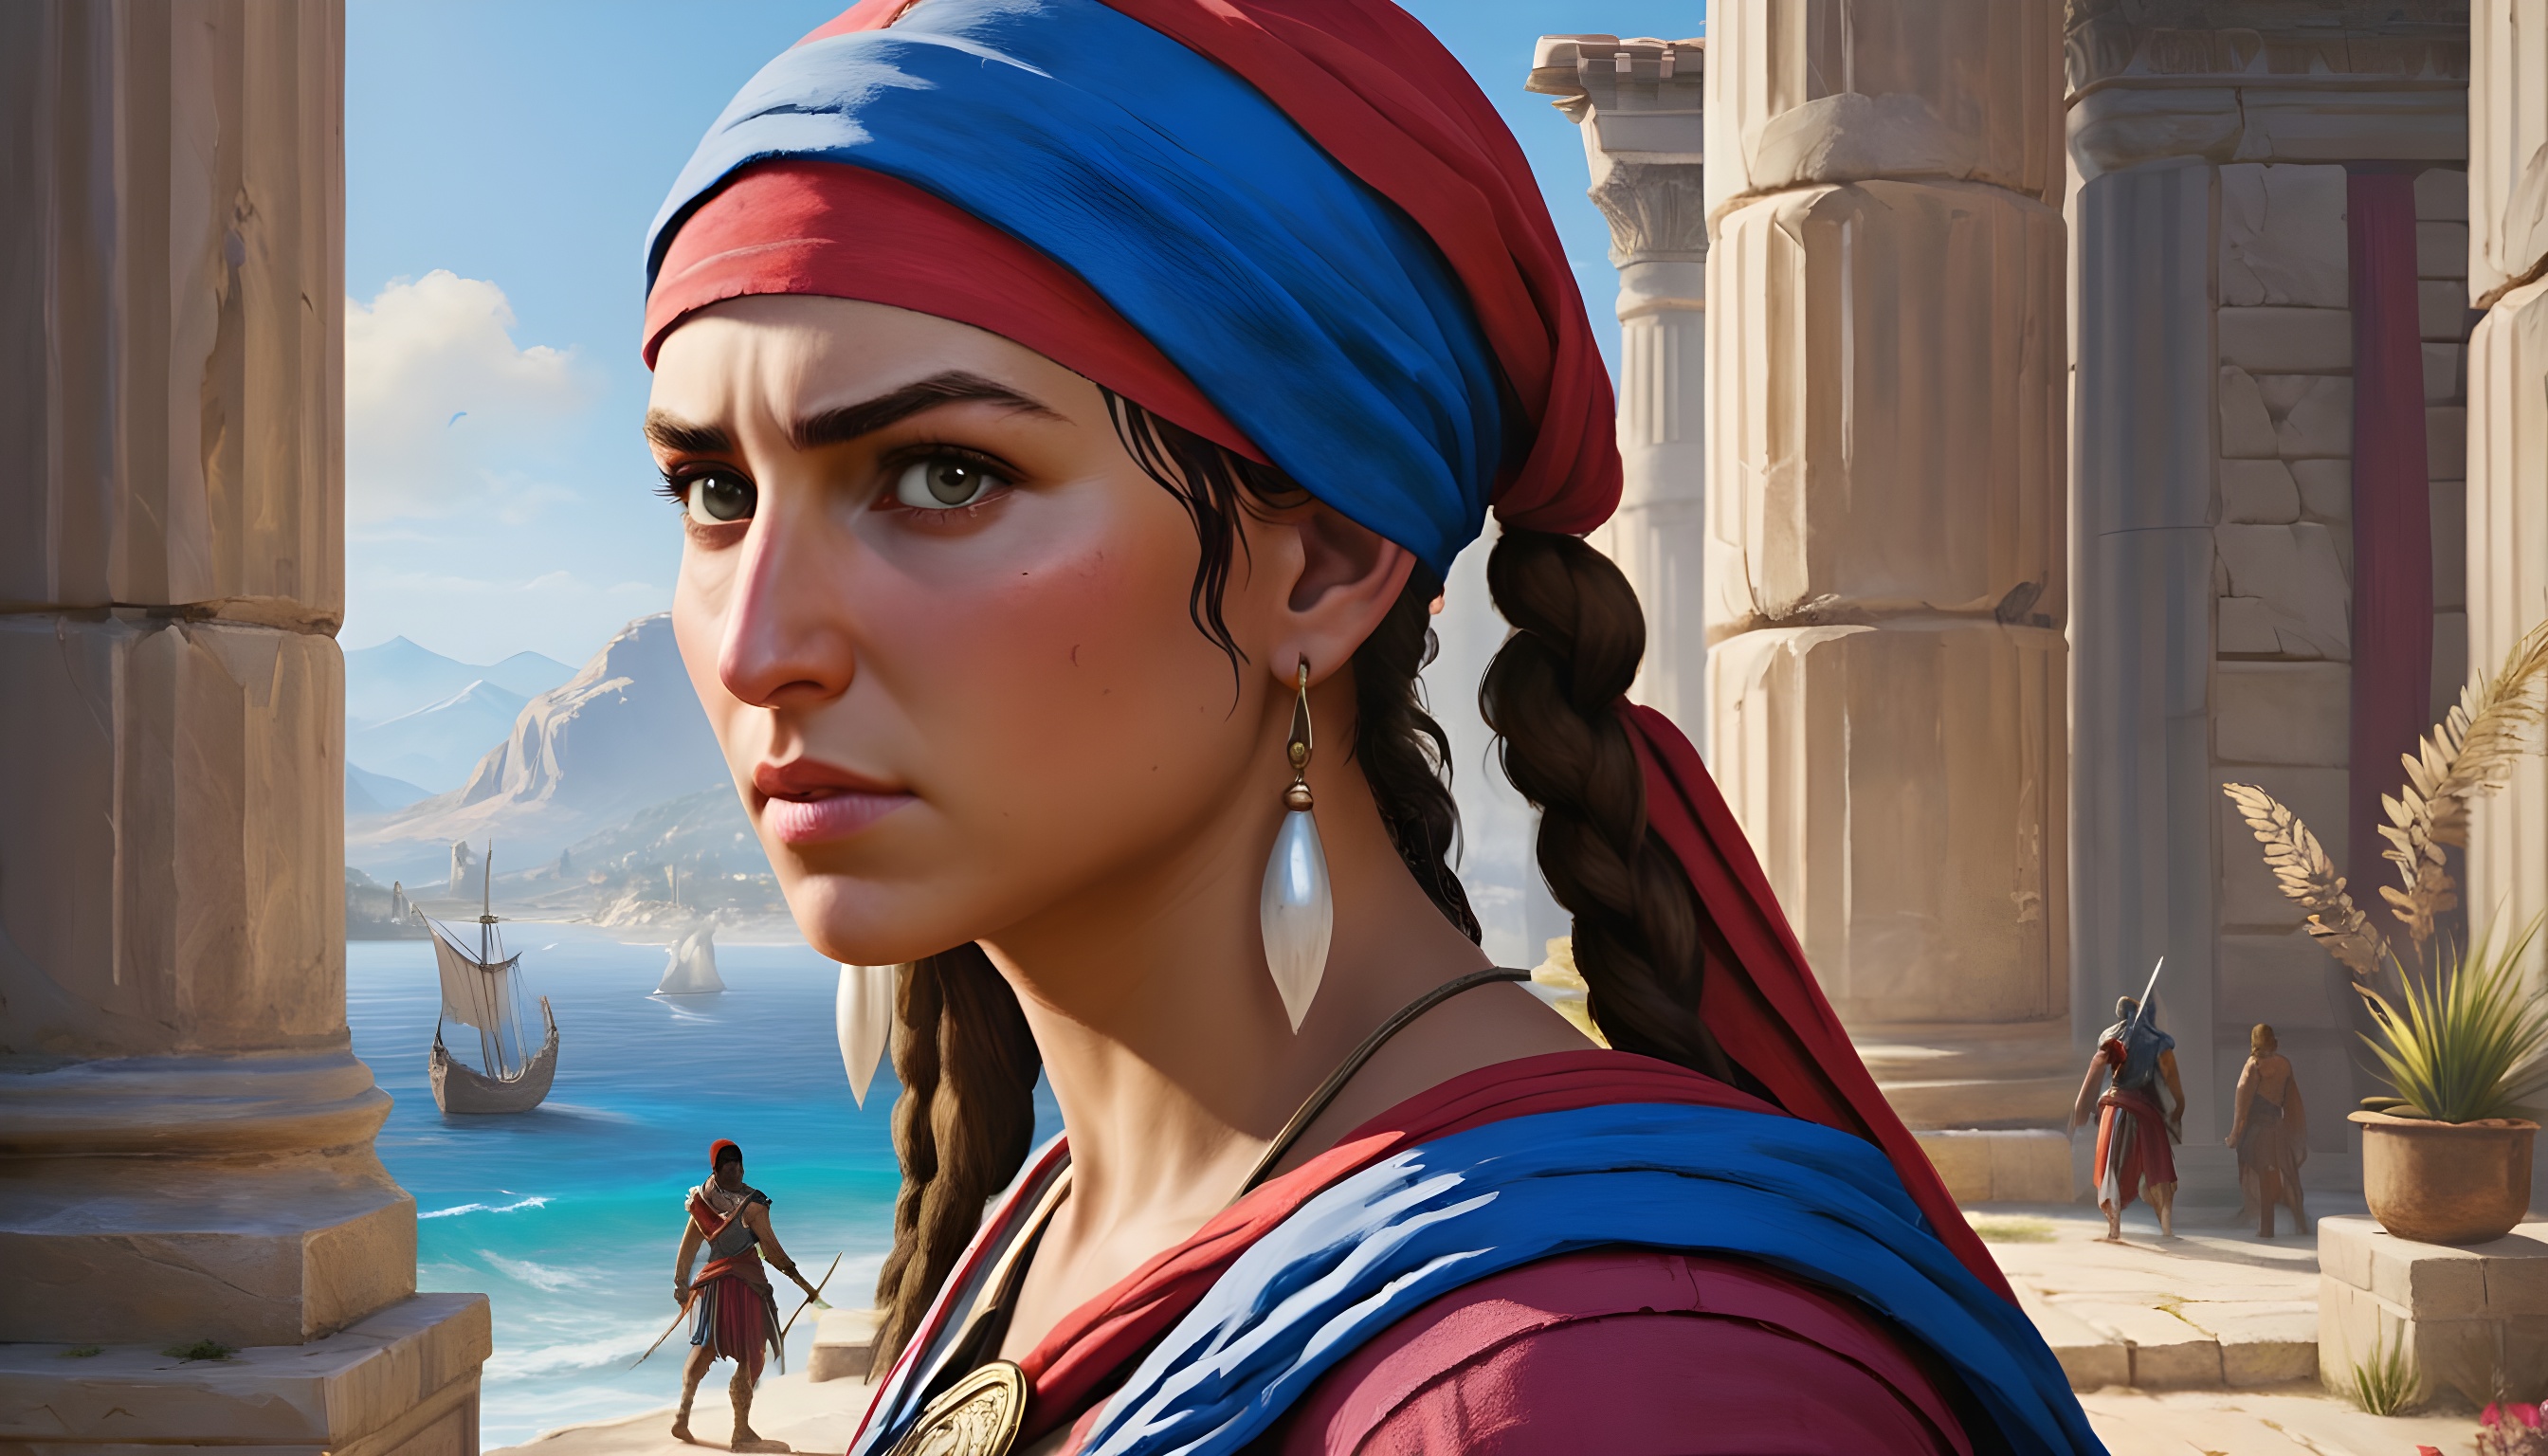 General 2688x1536 Assassin's Creed: Odyssey Assassin's Creed Kassandra AI art painting pearl earrings red blue freepik